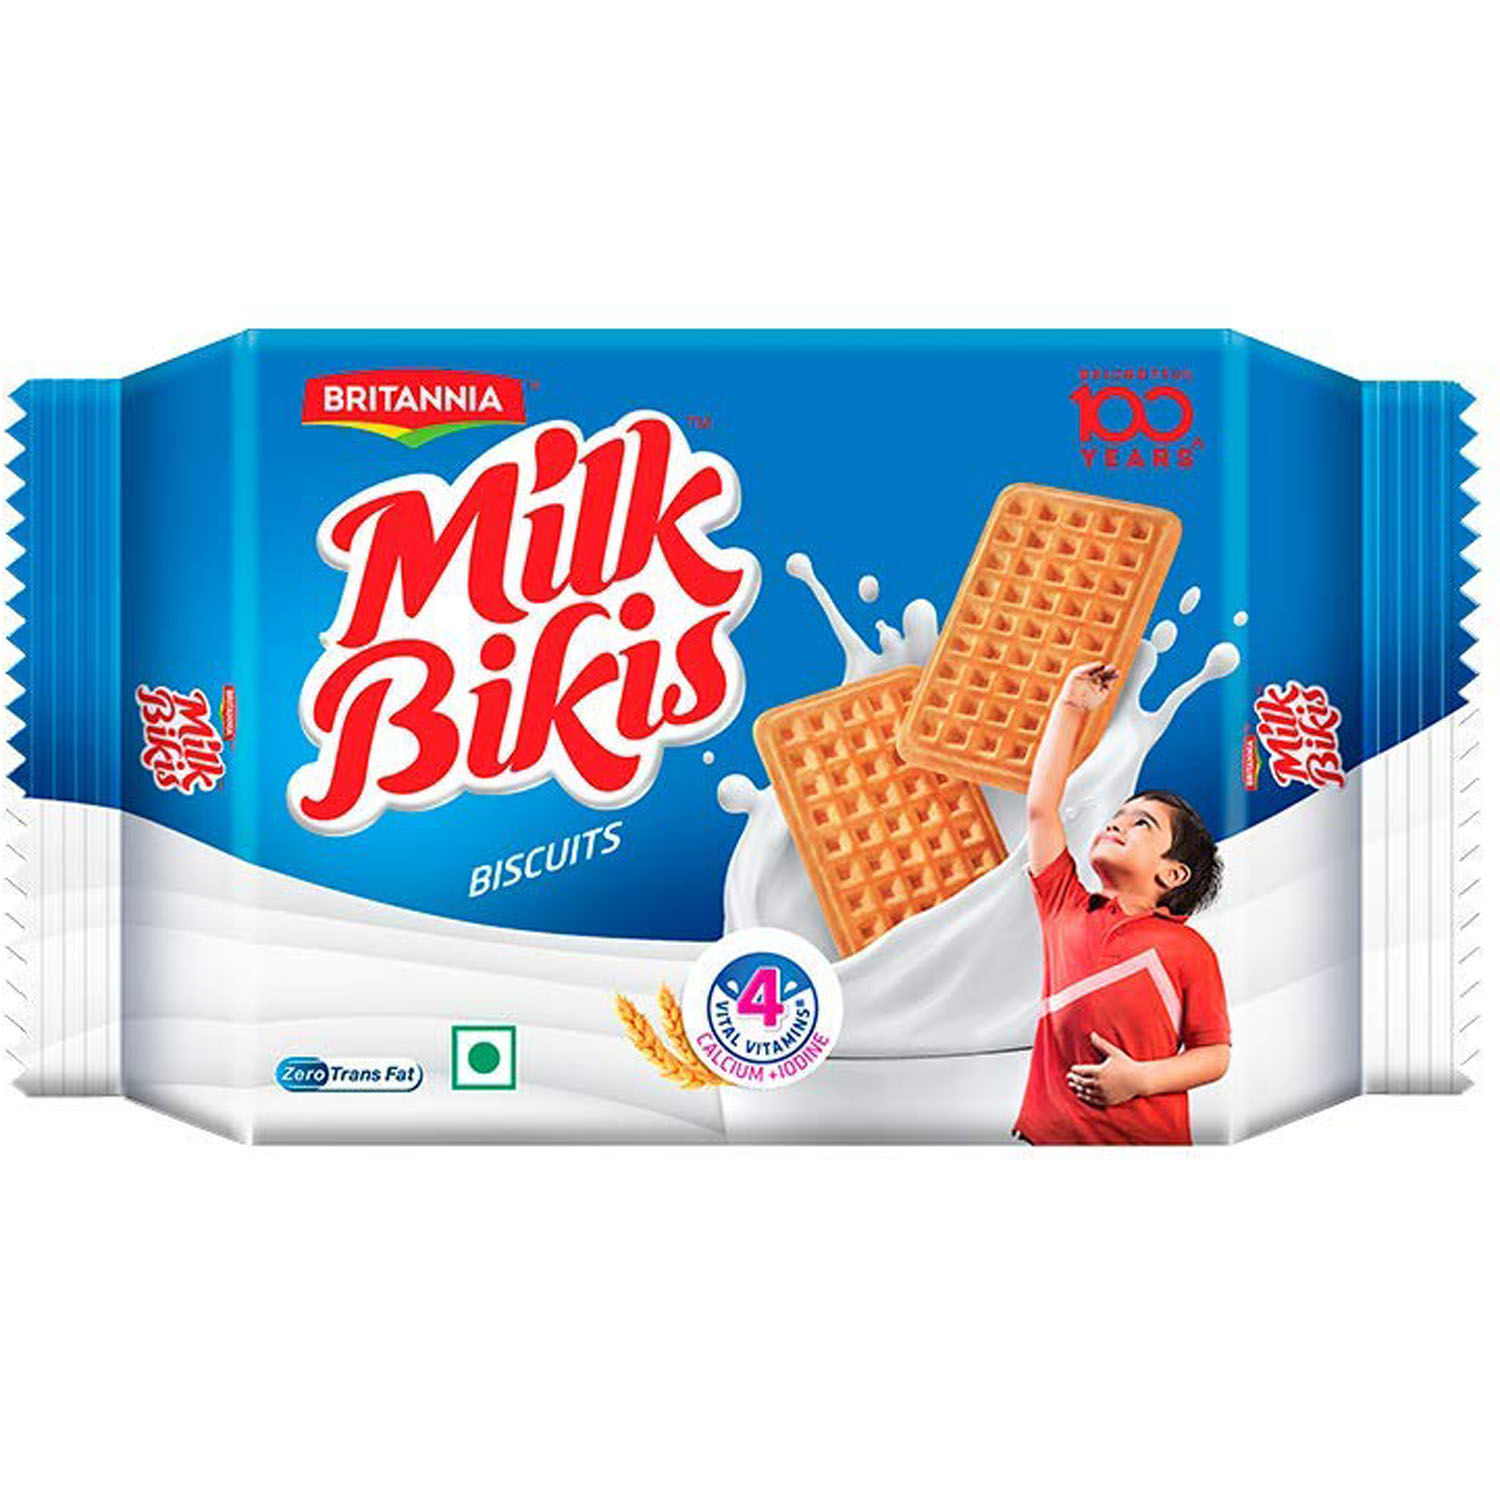 Britannia Milk Bikis Biscuits, 50 gm, Pack of 1 